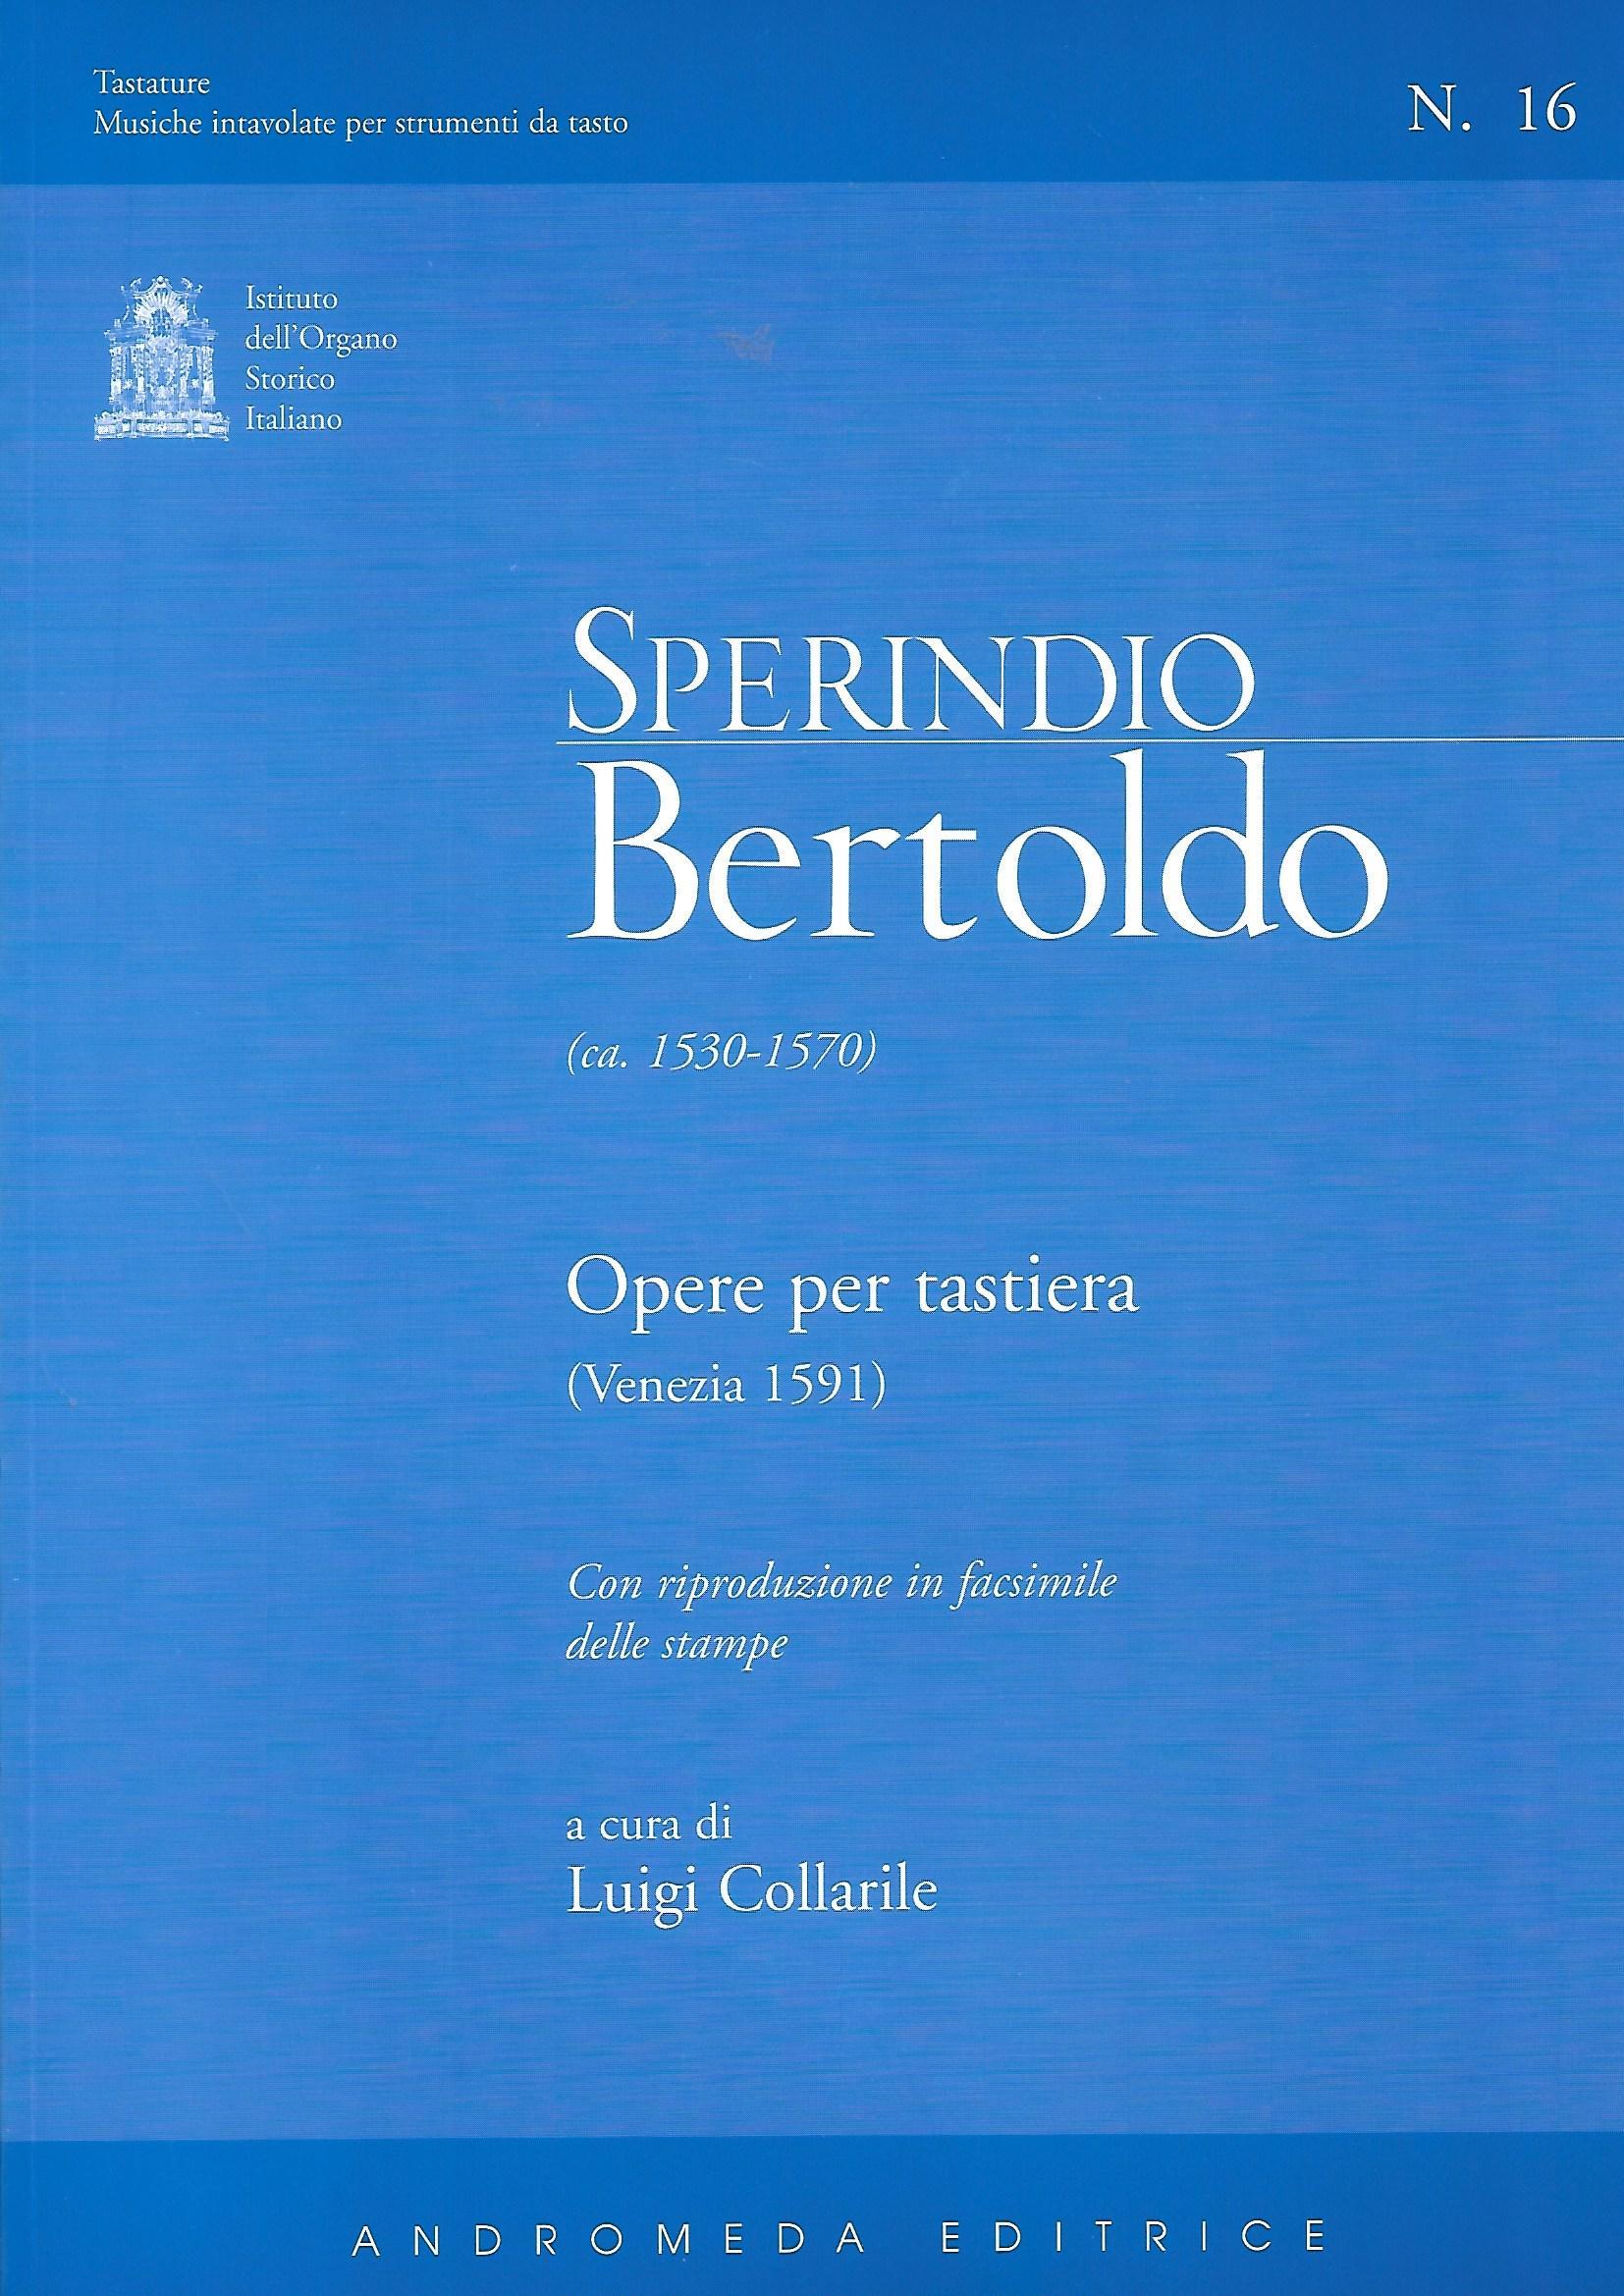 Ta16 Bertoldo Sperindio - opere per tastiera (Venezia 1591)